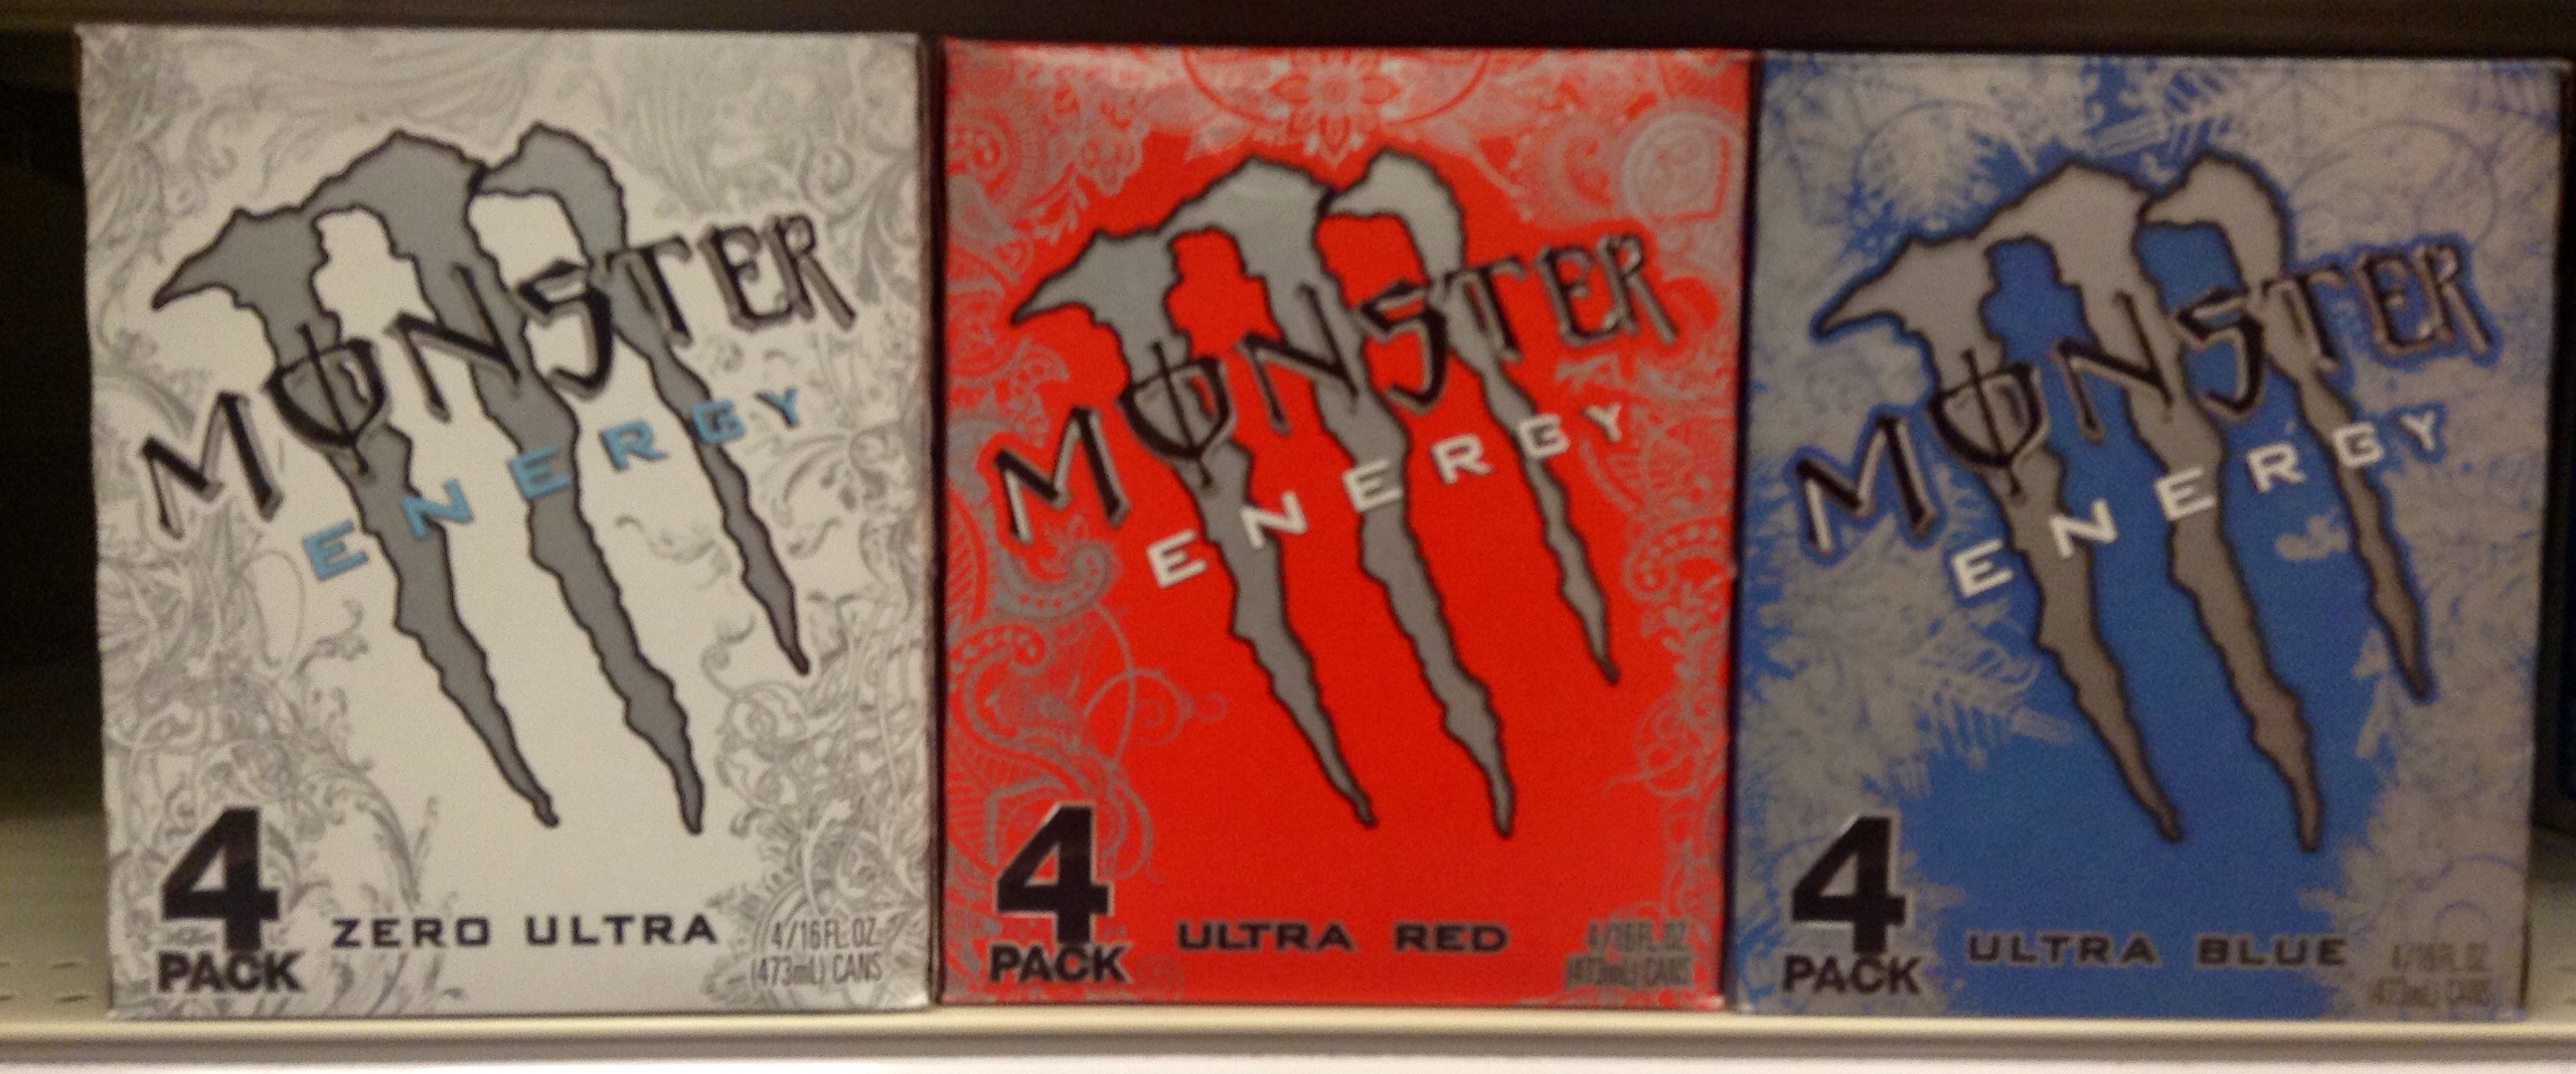 four packs of monster energy drink on a shelf